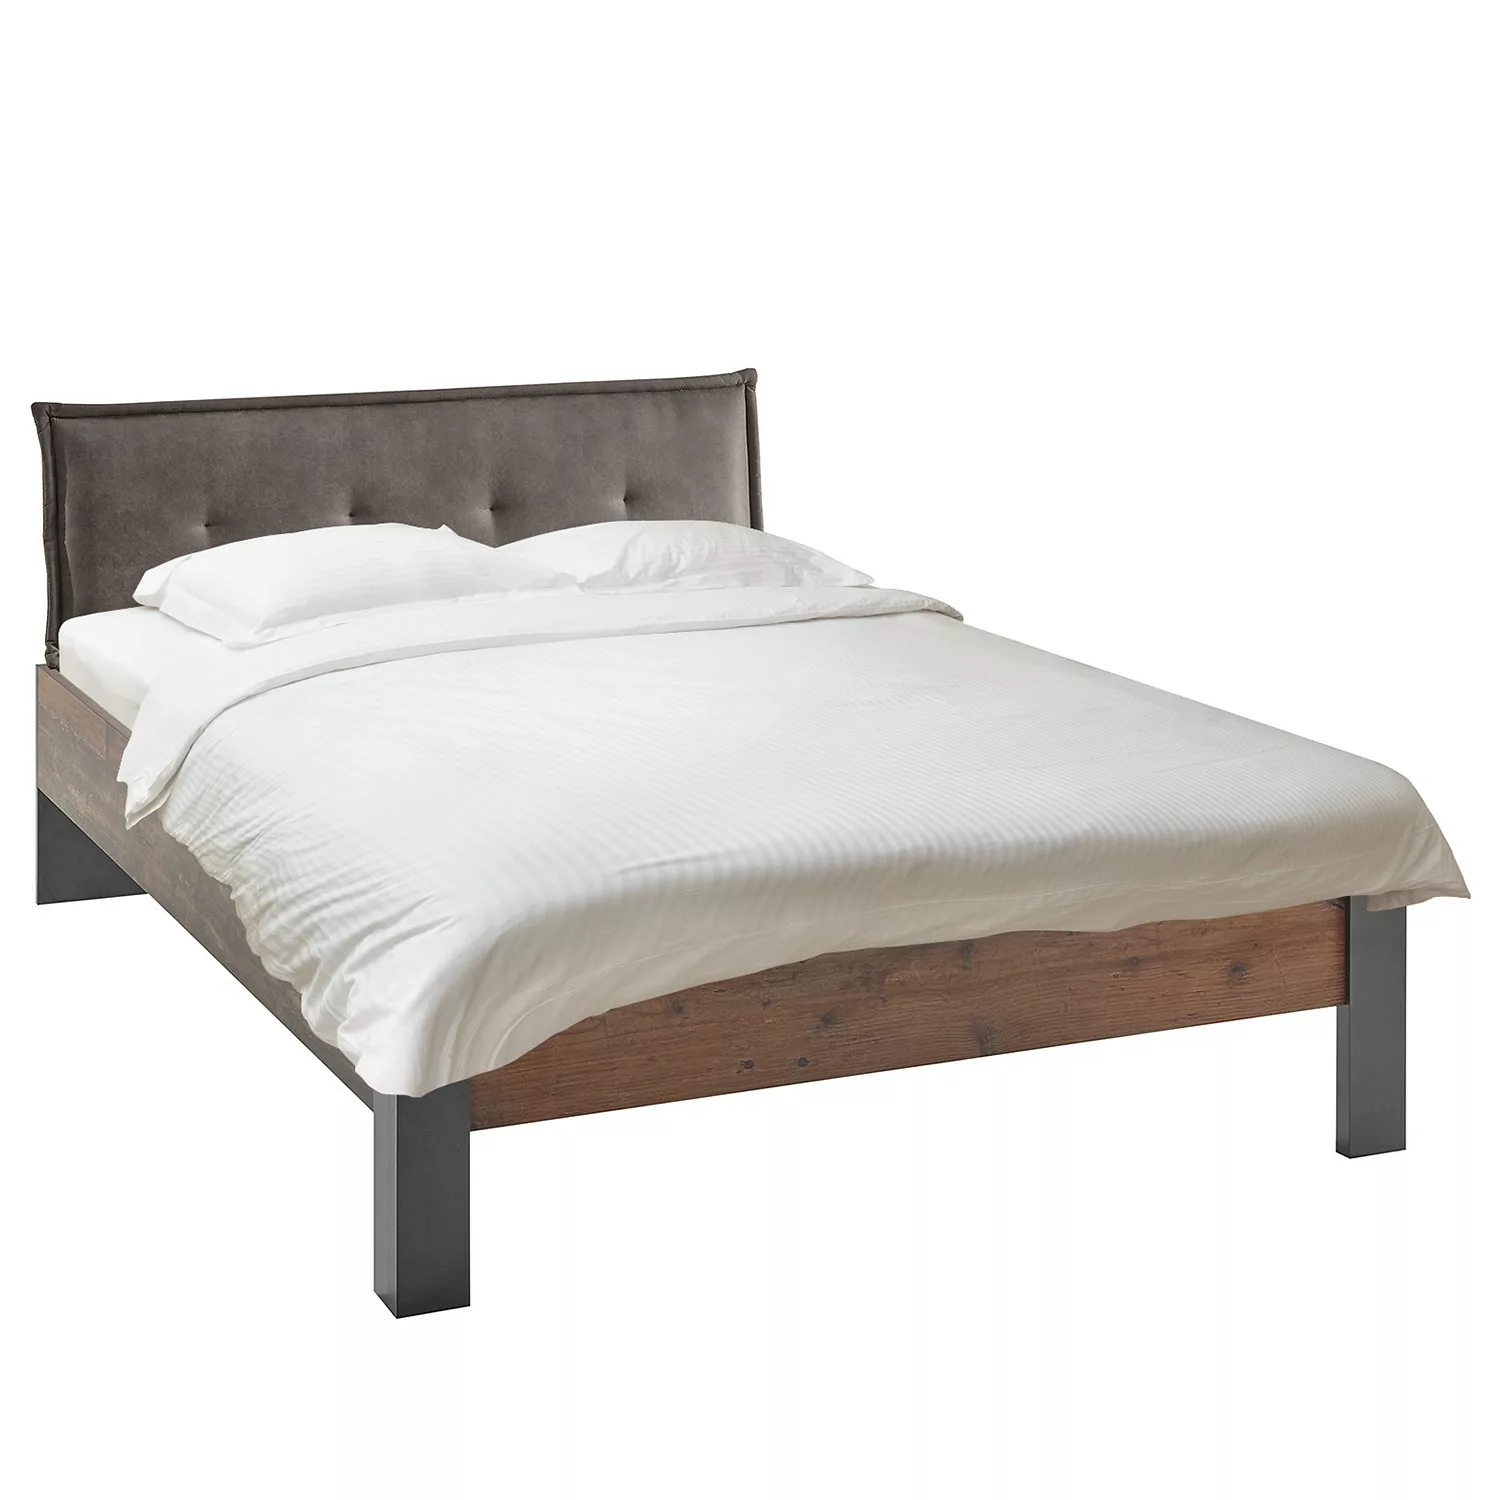 Möbel Stellbrink Holzbett Bett II 140x200cm Brooklyn günstig online kaufen